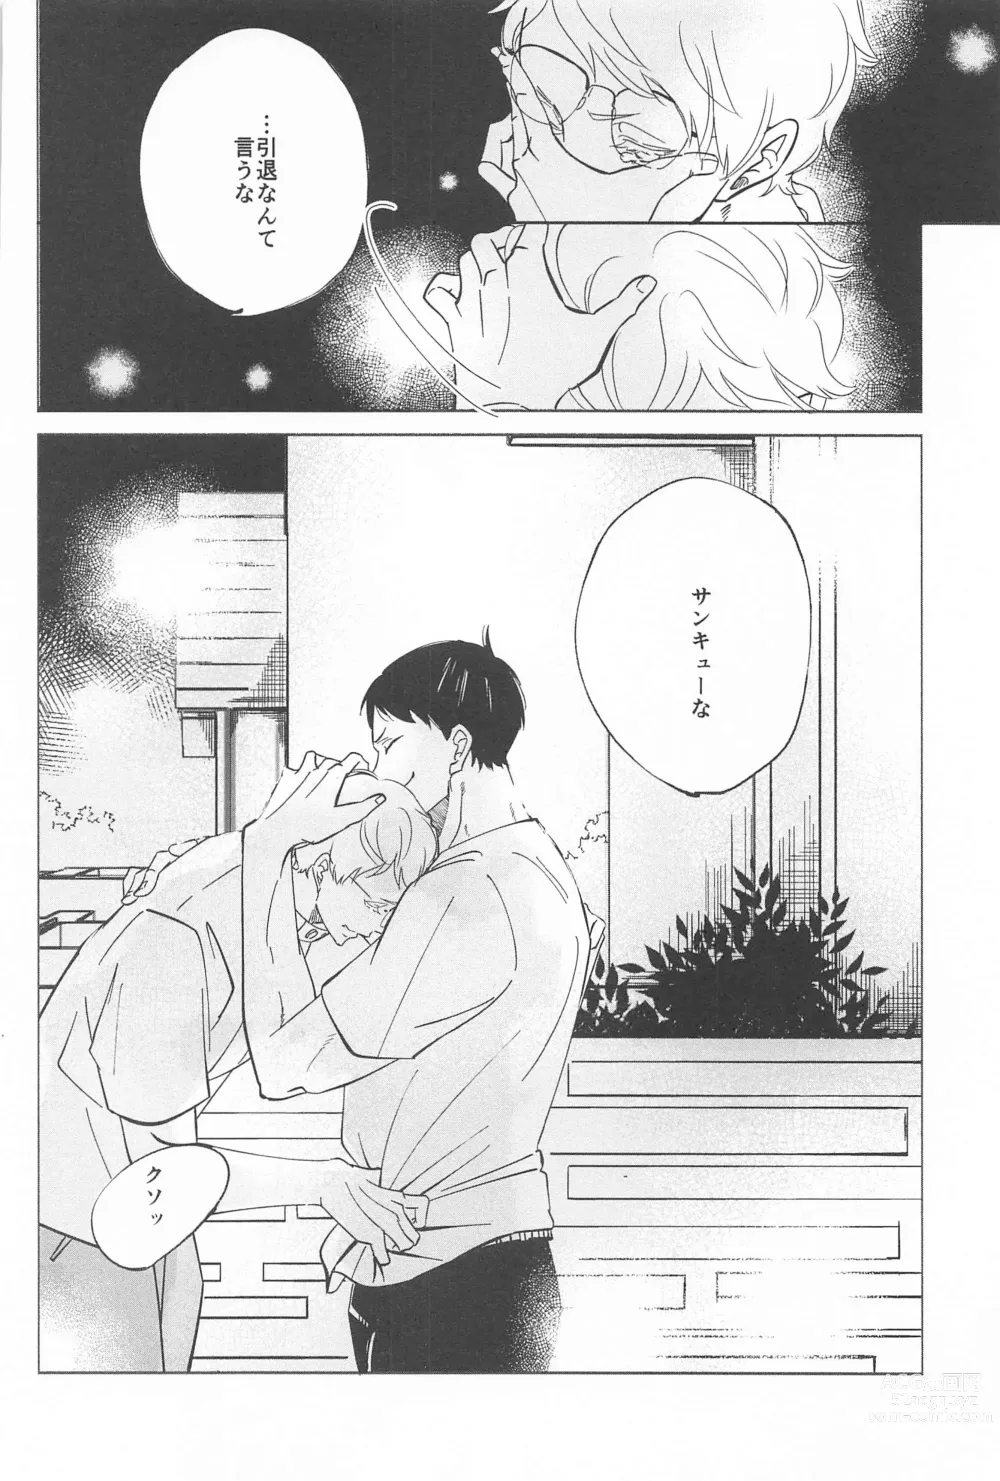 Page 32 of doujinshi Ketsui no Katachi